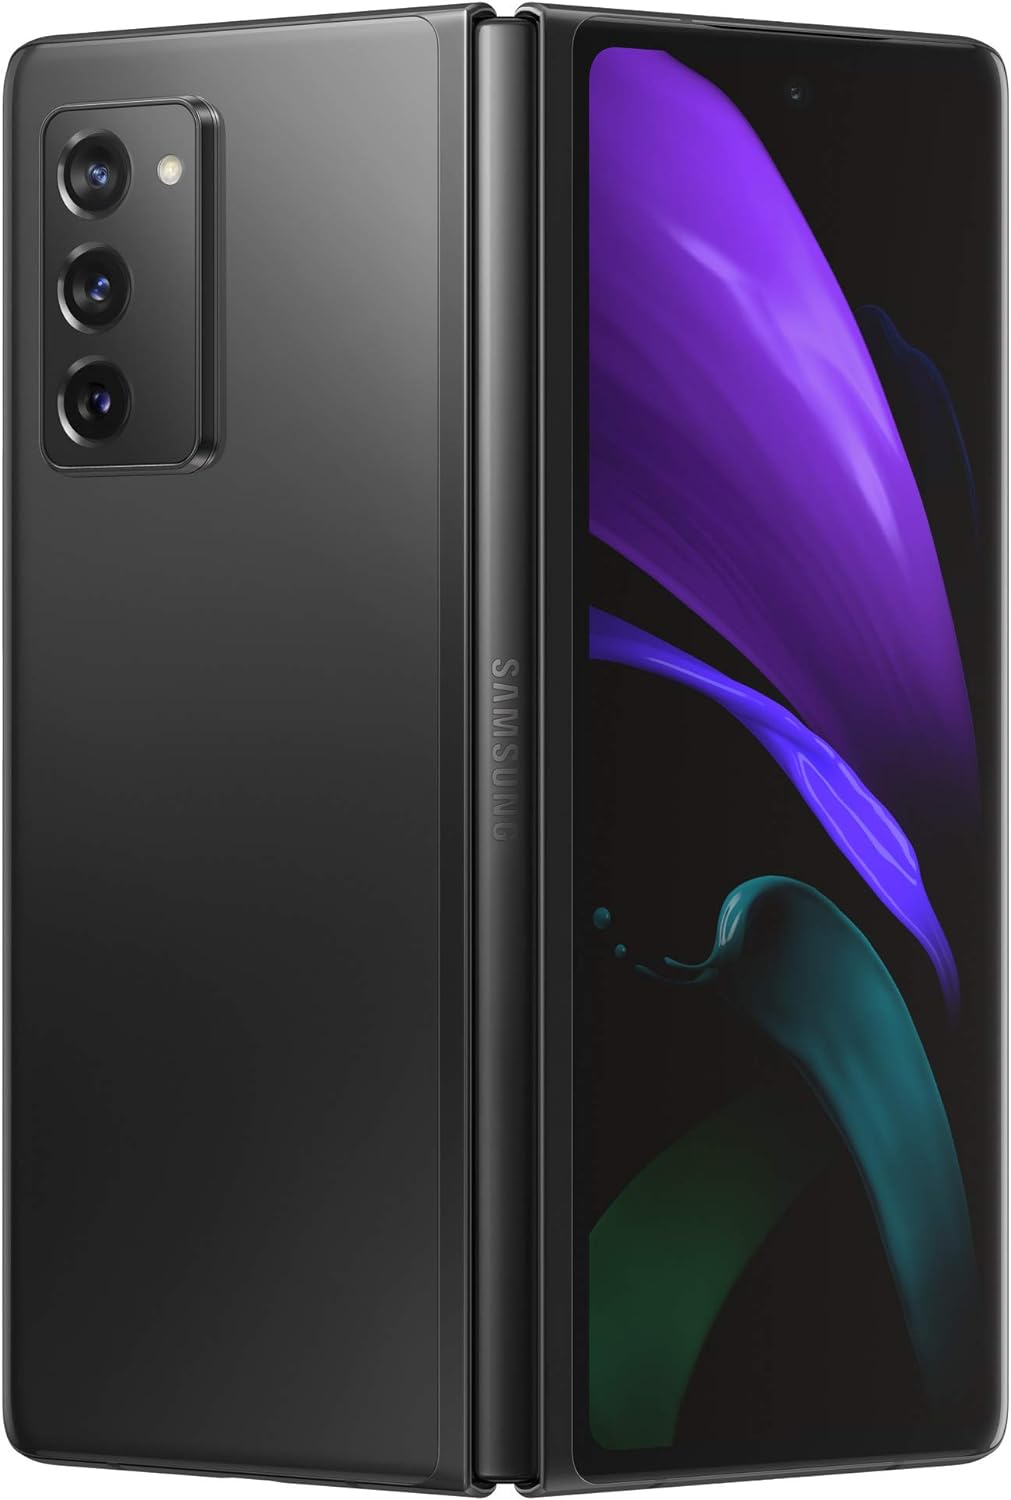 Samsung Galaxy Z Fold2 5G 256GB (Unlocked) - Mystic Black (Refurbished)